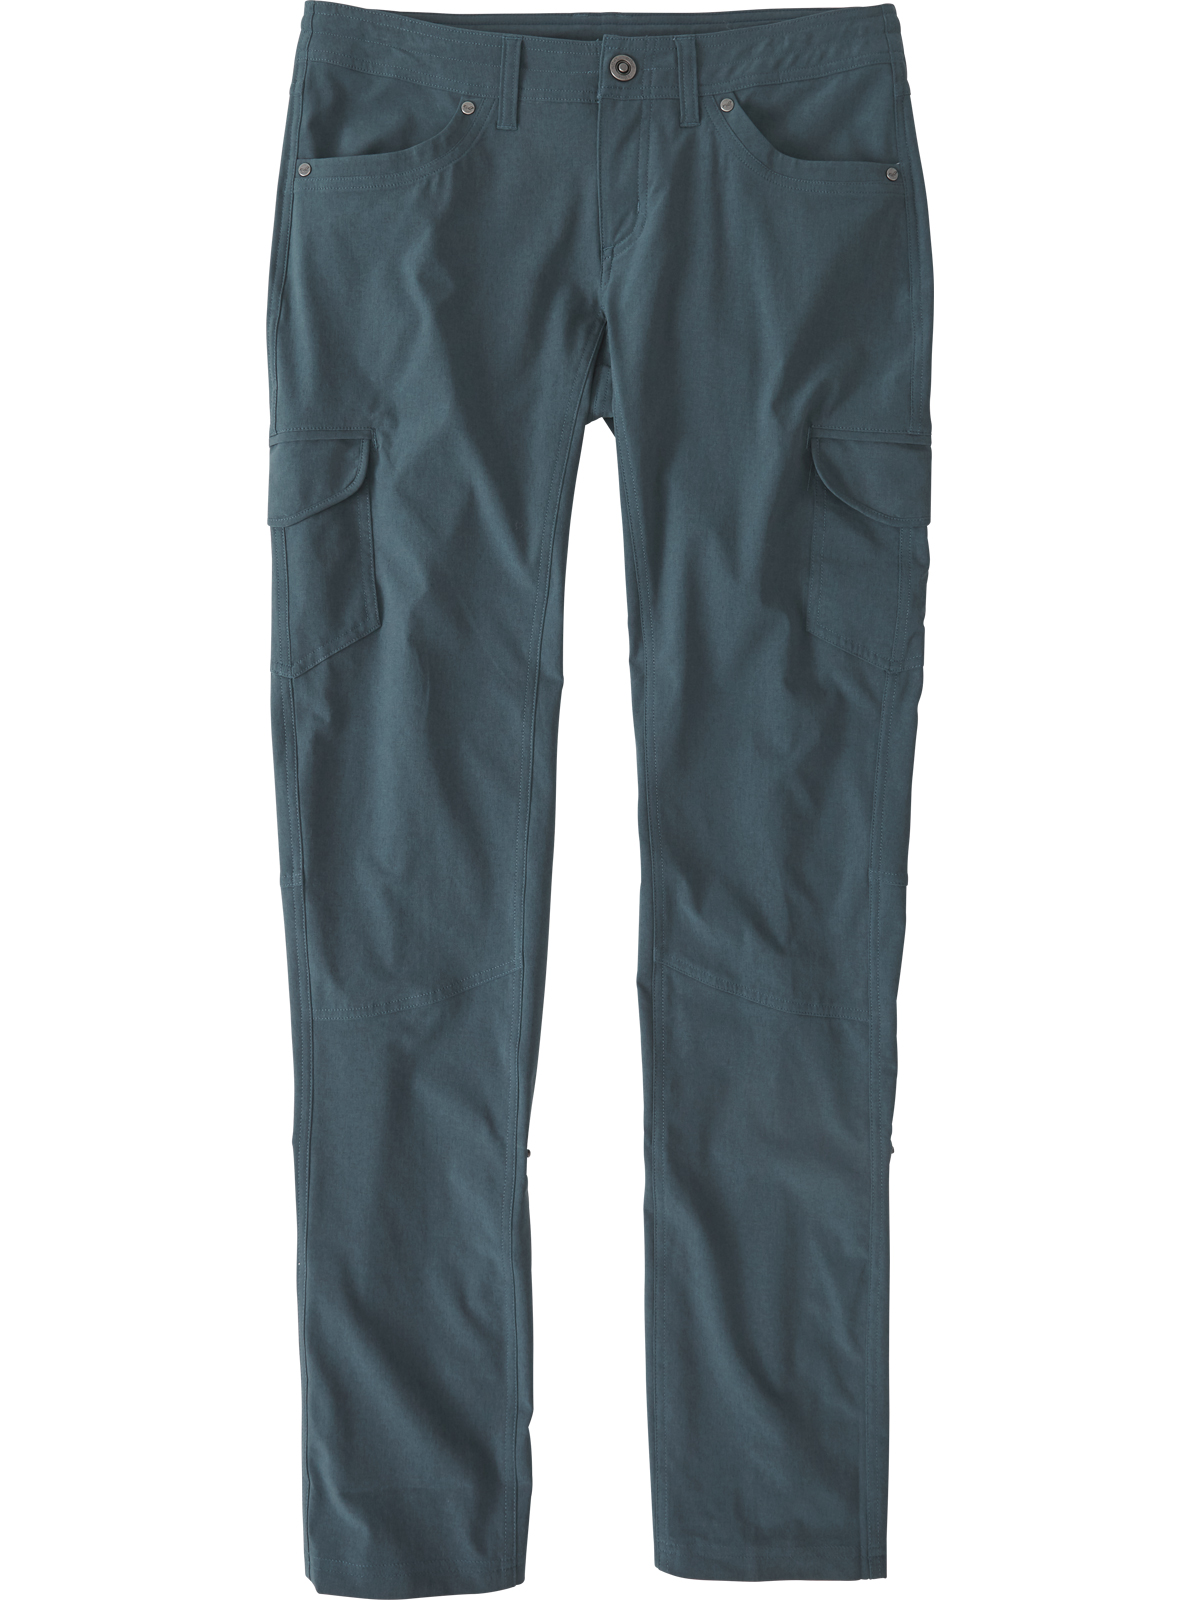 Title Nine Green Rogue Capri Hiking Pants | Hiking pants, Pants, Outdoor  pants